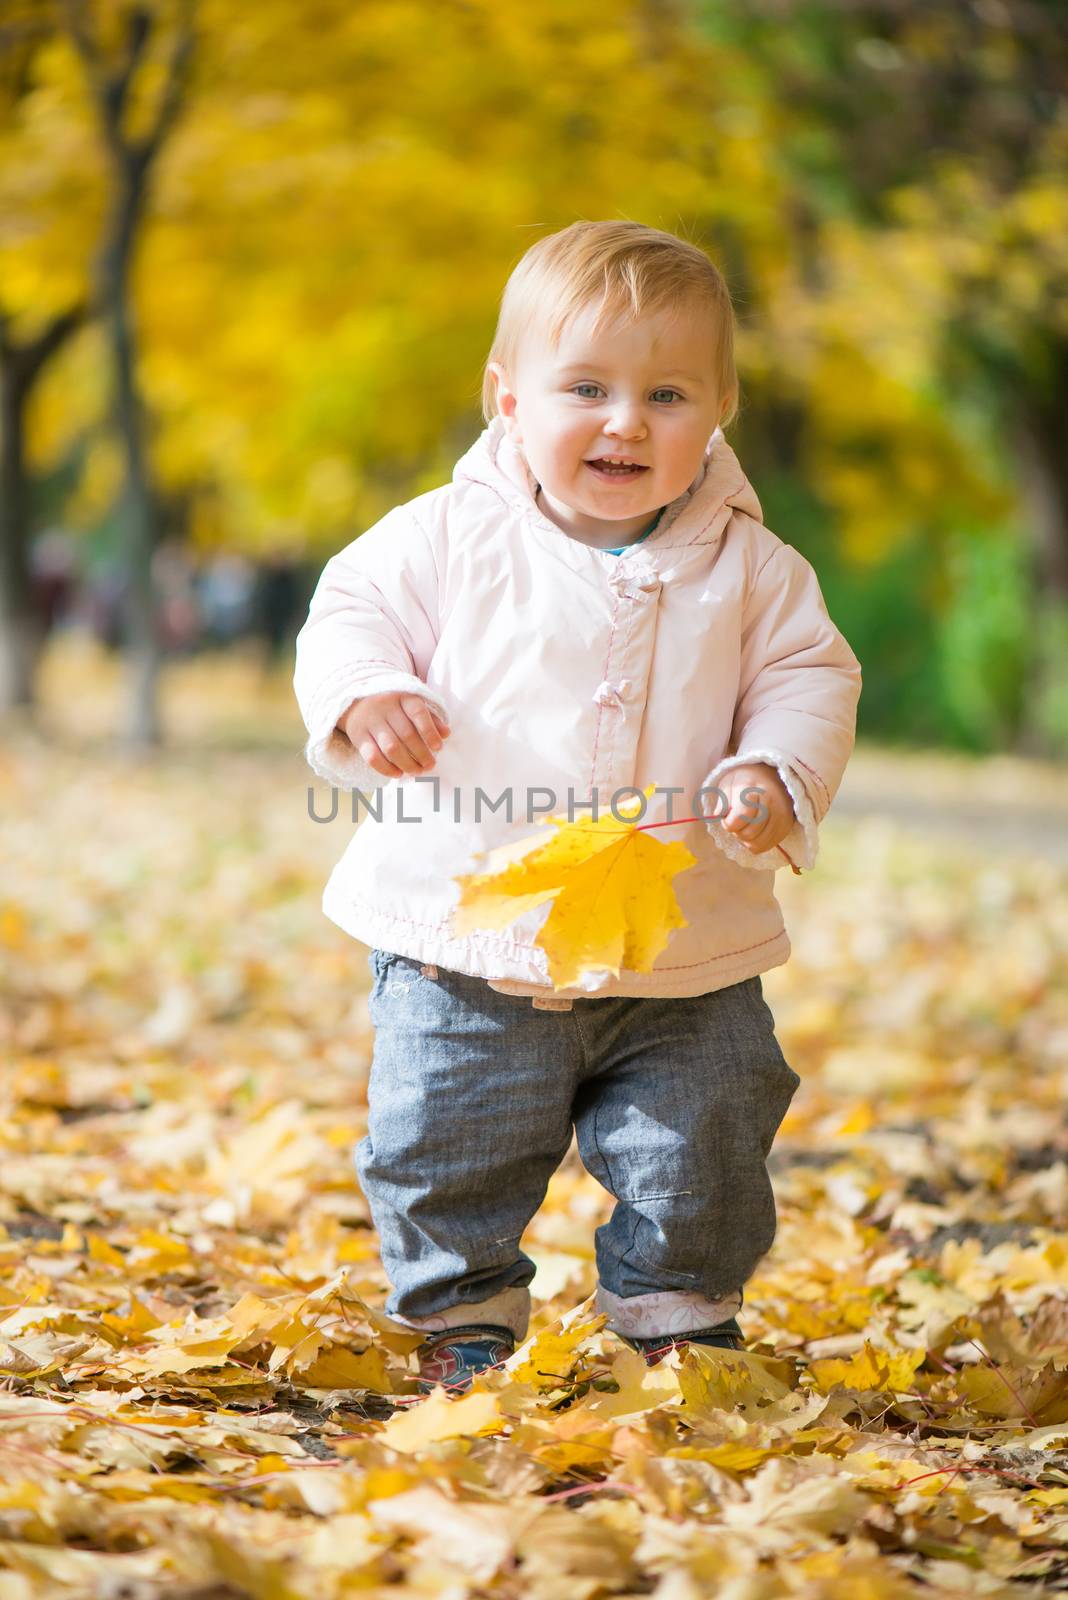 little baby in the park by GekaSkr